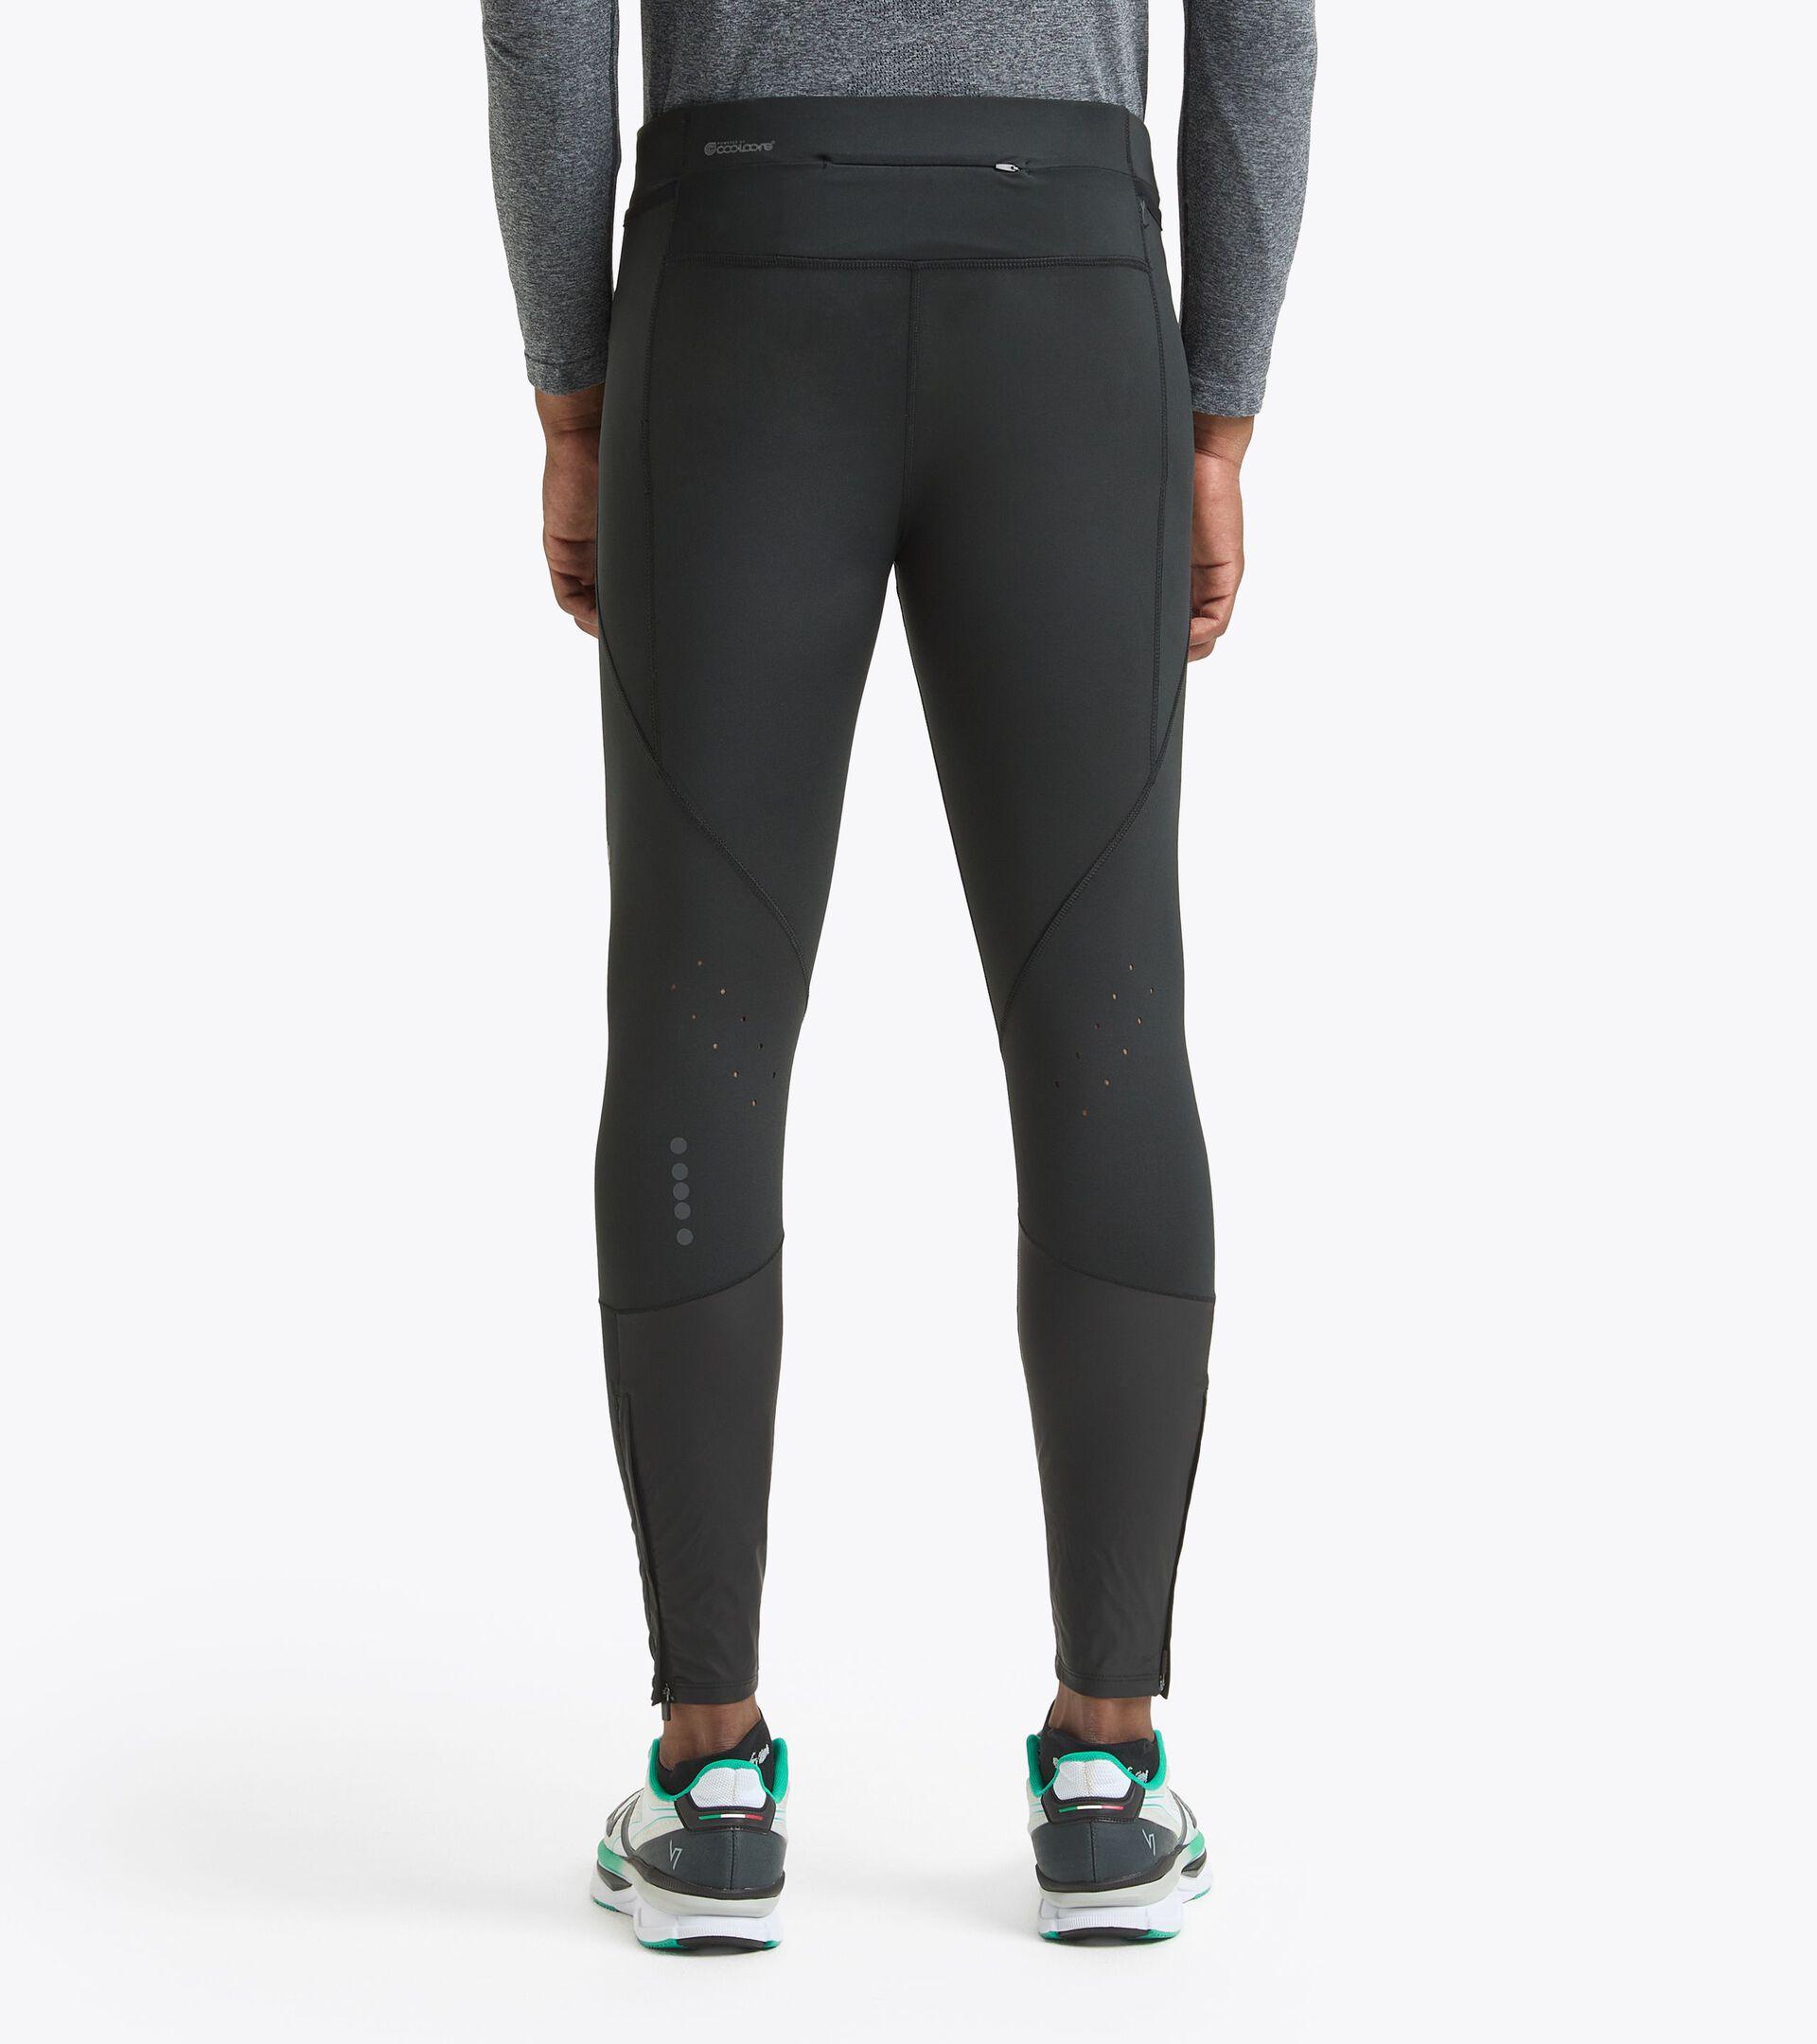 RUN TIGHTS WINTER PROTECTION Sports leggings - Men - Diadora Online Store US